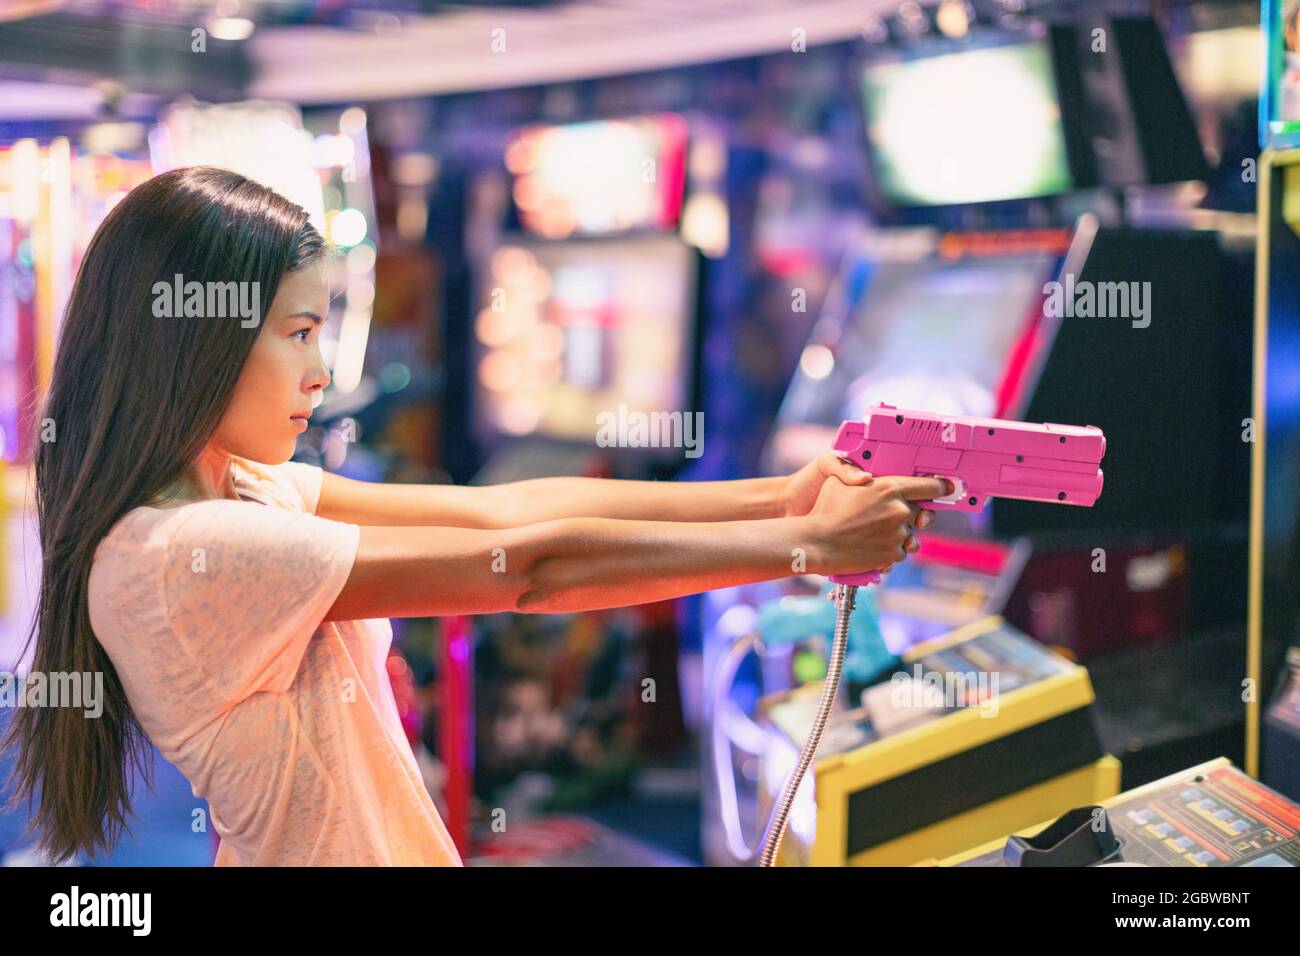 Arcade game machine adult woman shooting gun video games playing light shoot videogame virtual reality Stock Photo